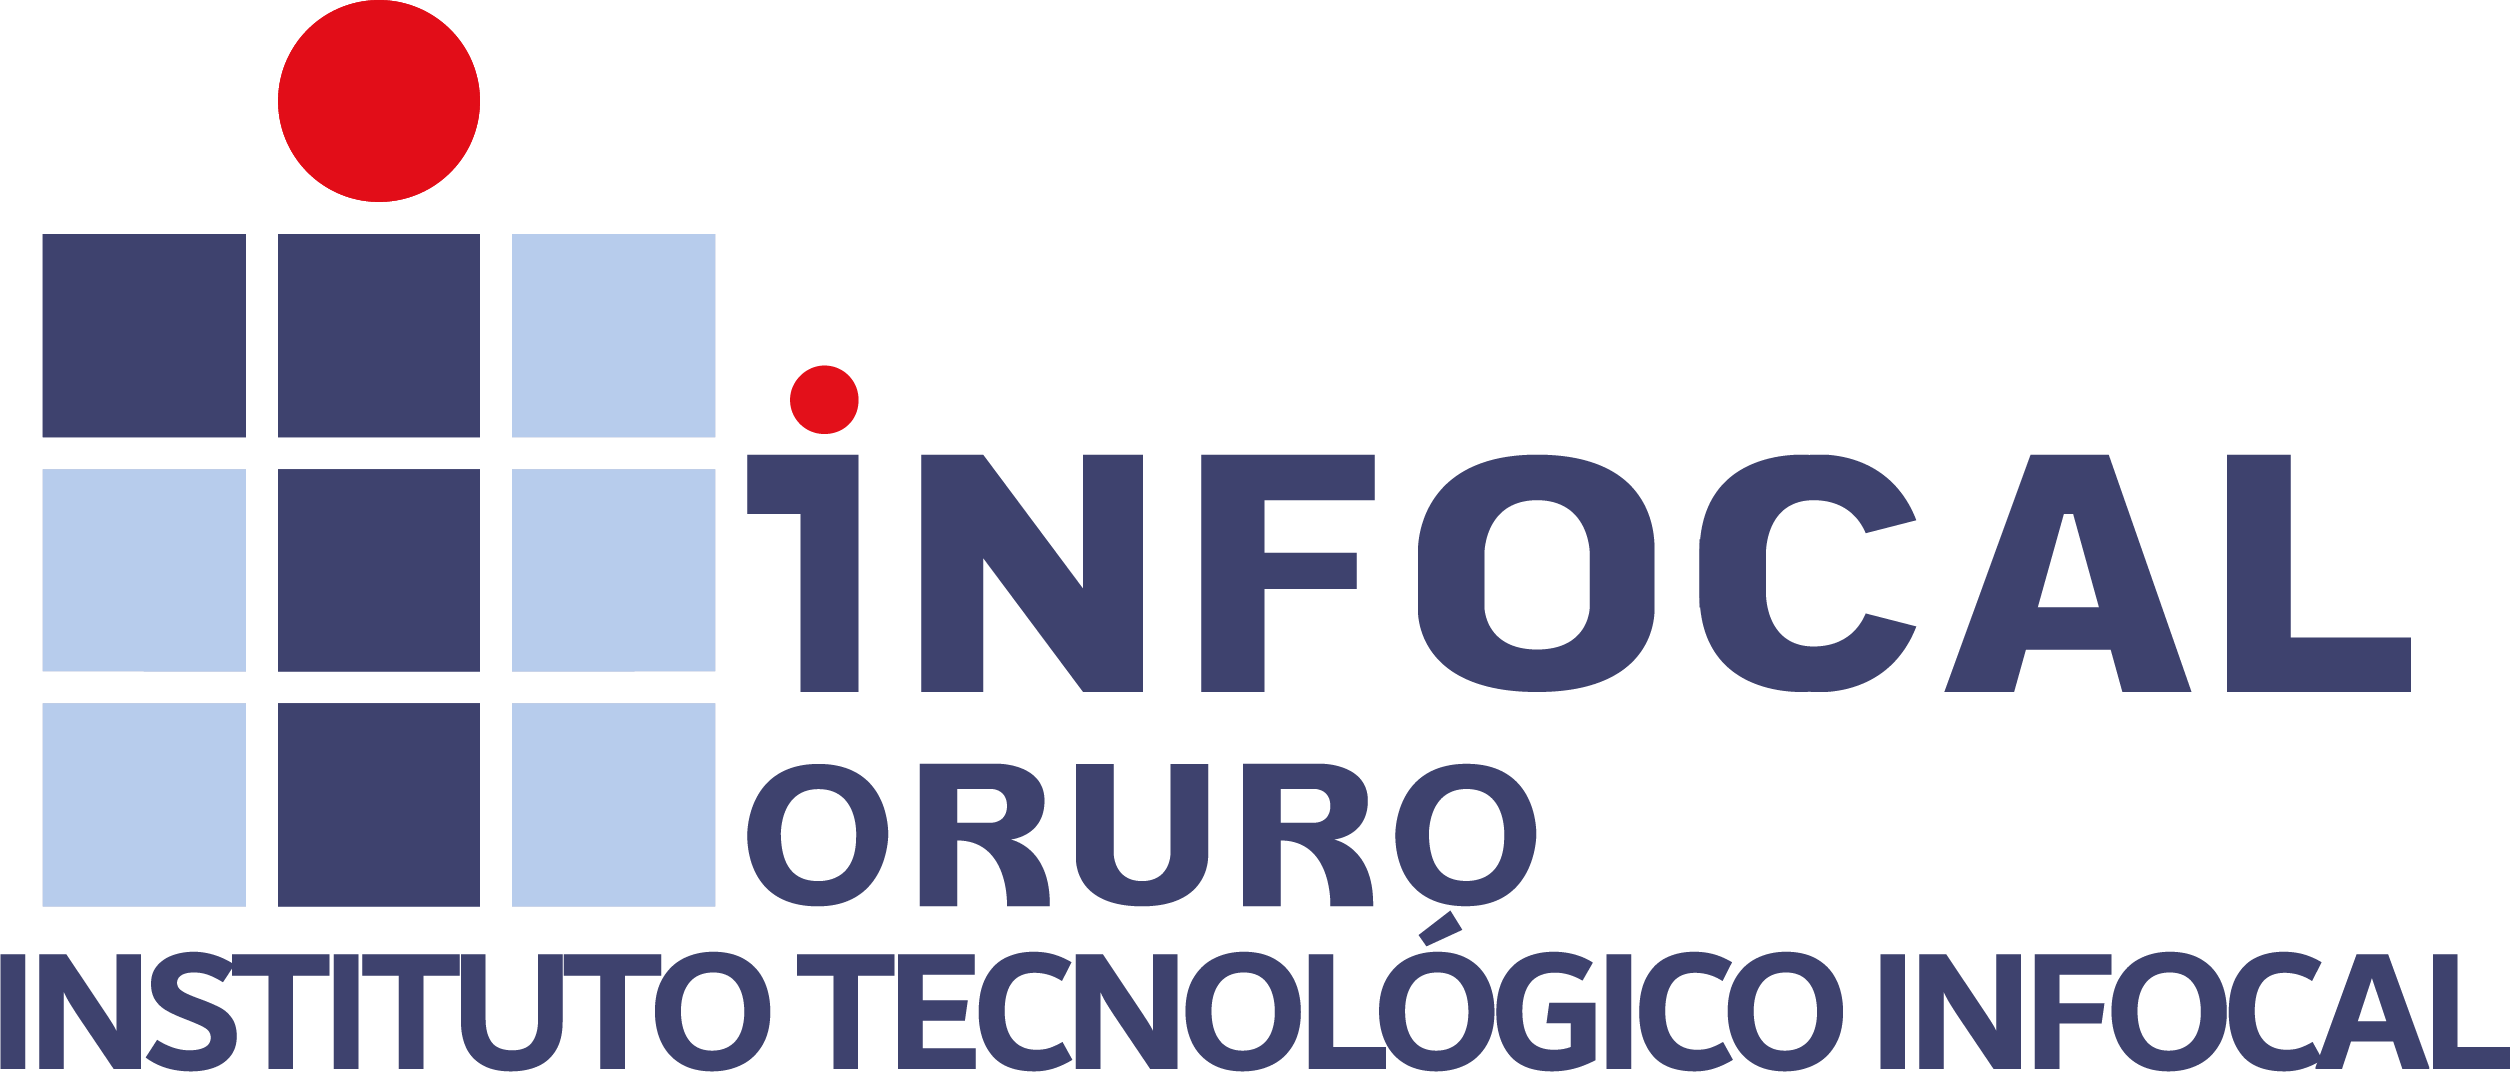 Instituto Tecnológico Infocal Oruro